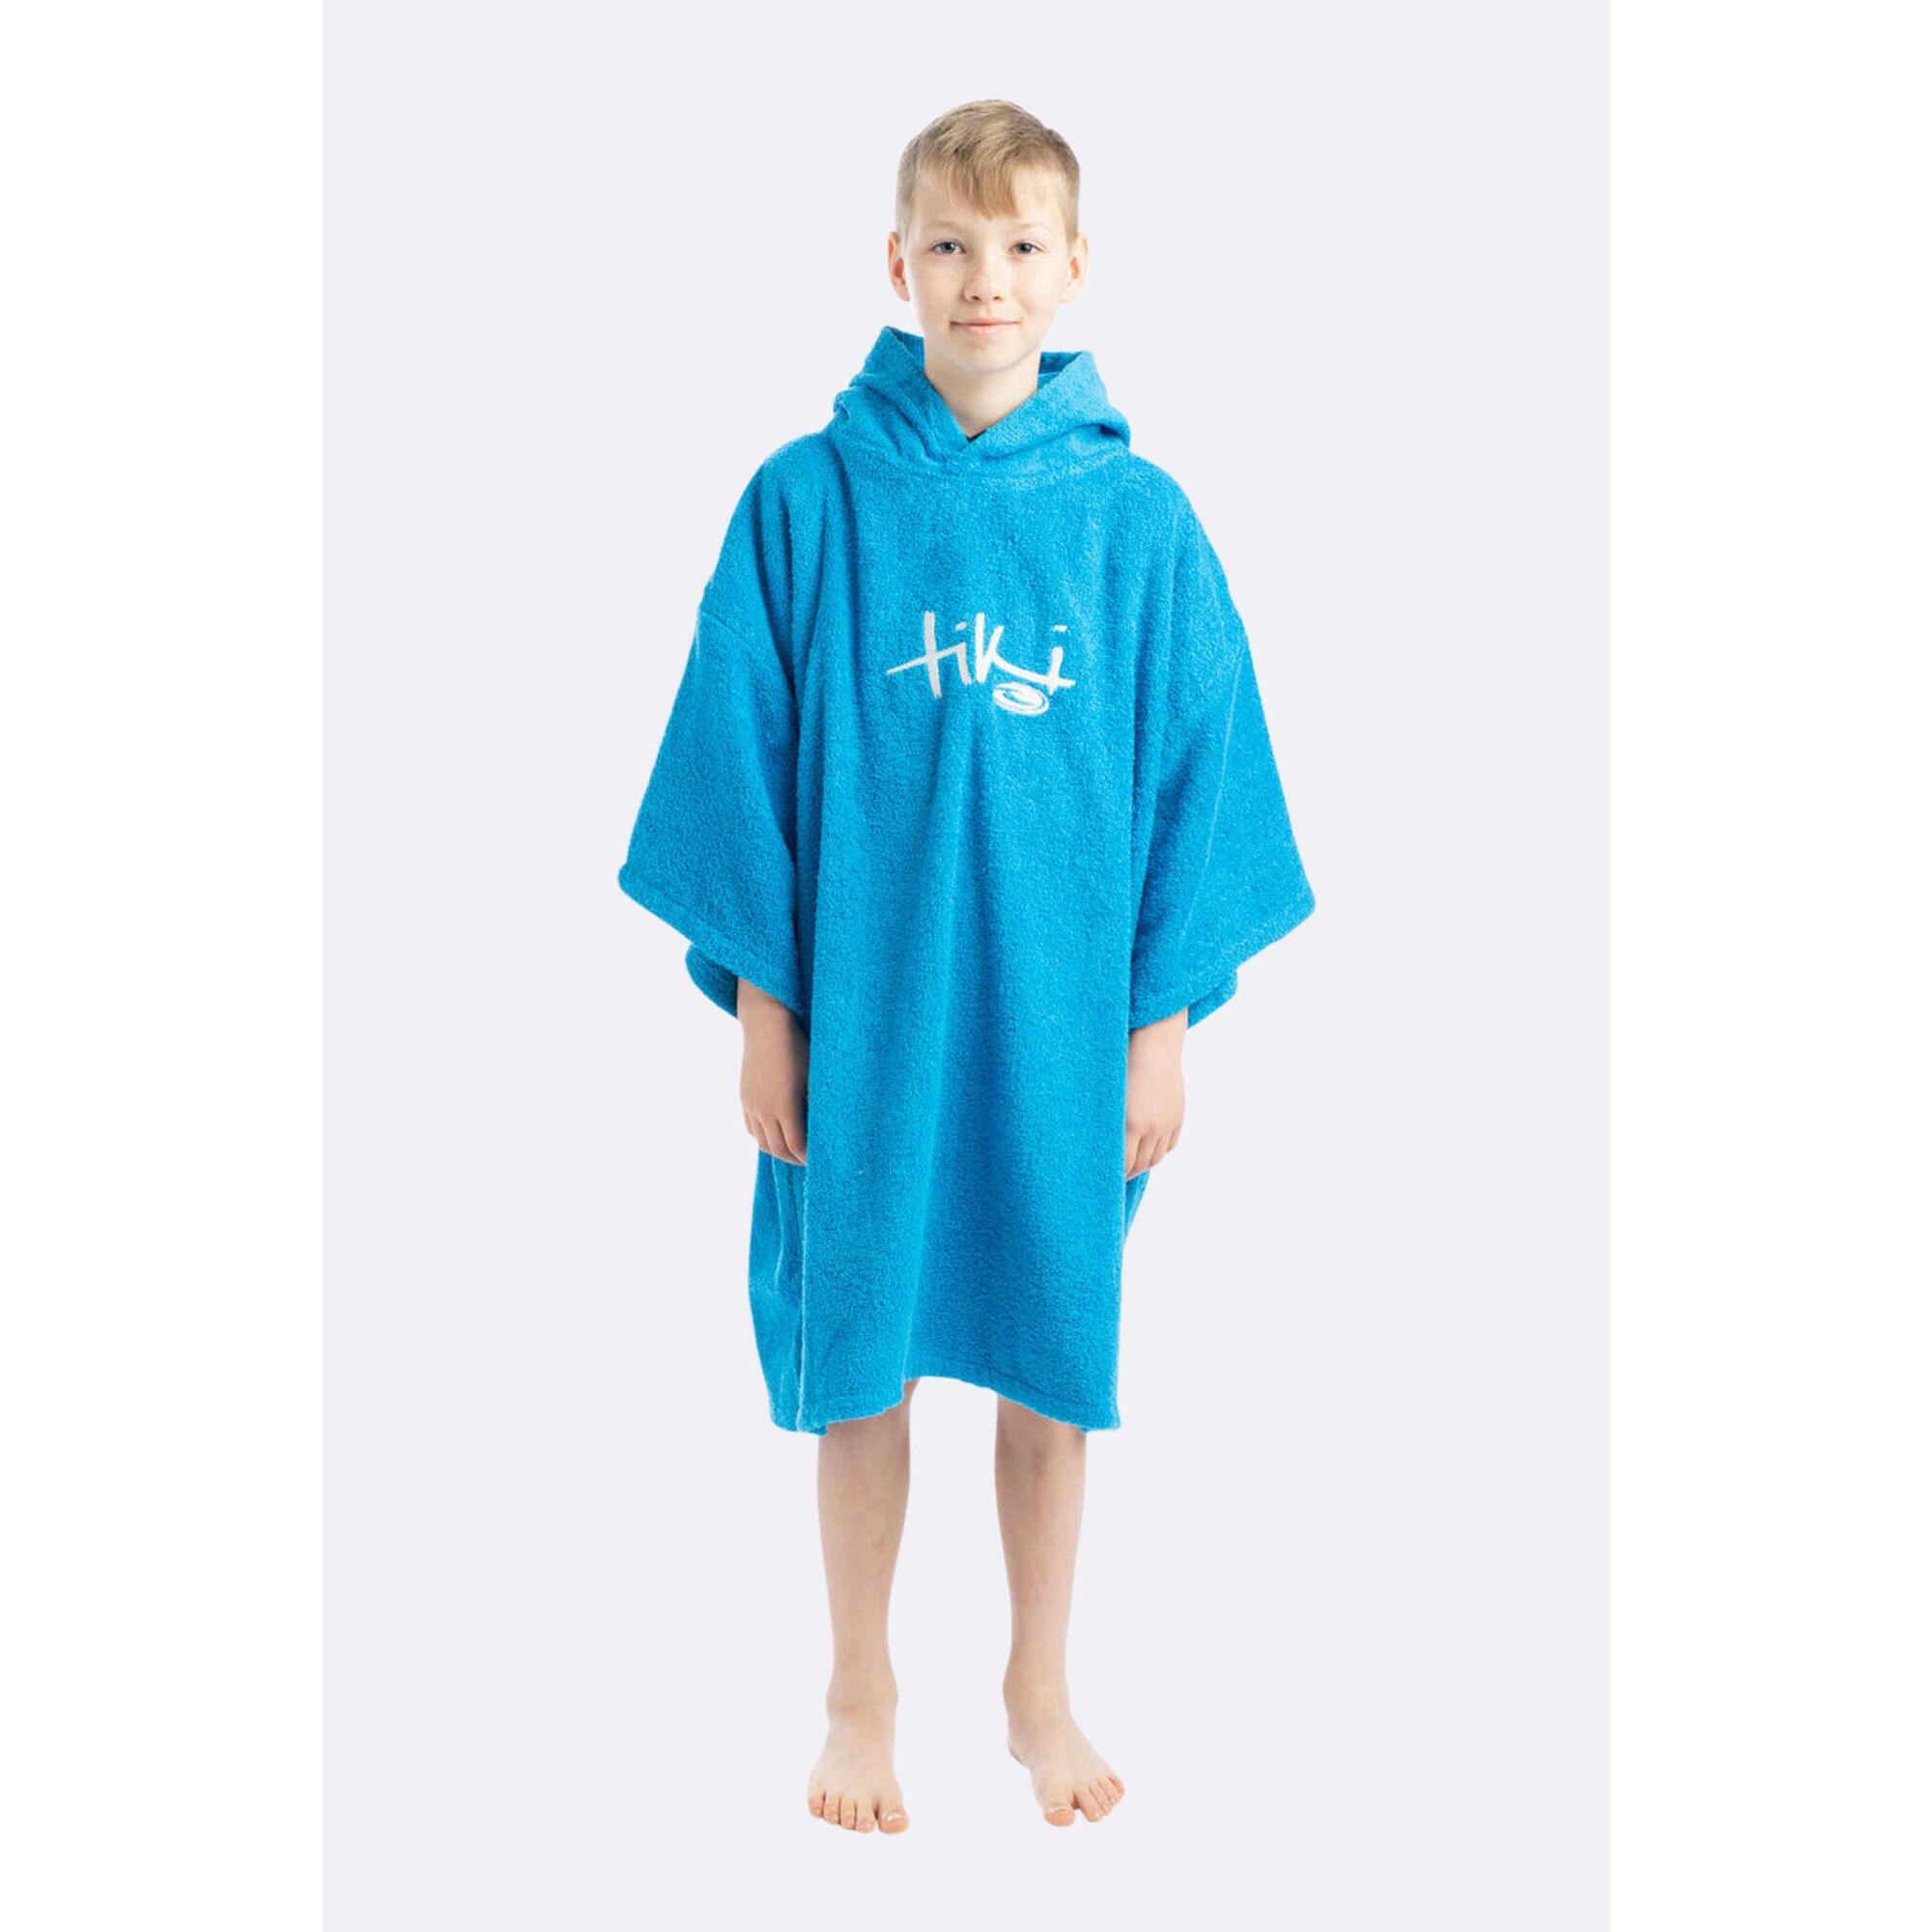 TIKI SURF Junior Hooded Change Robe - Blue